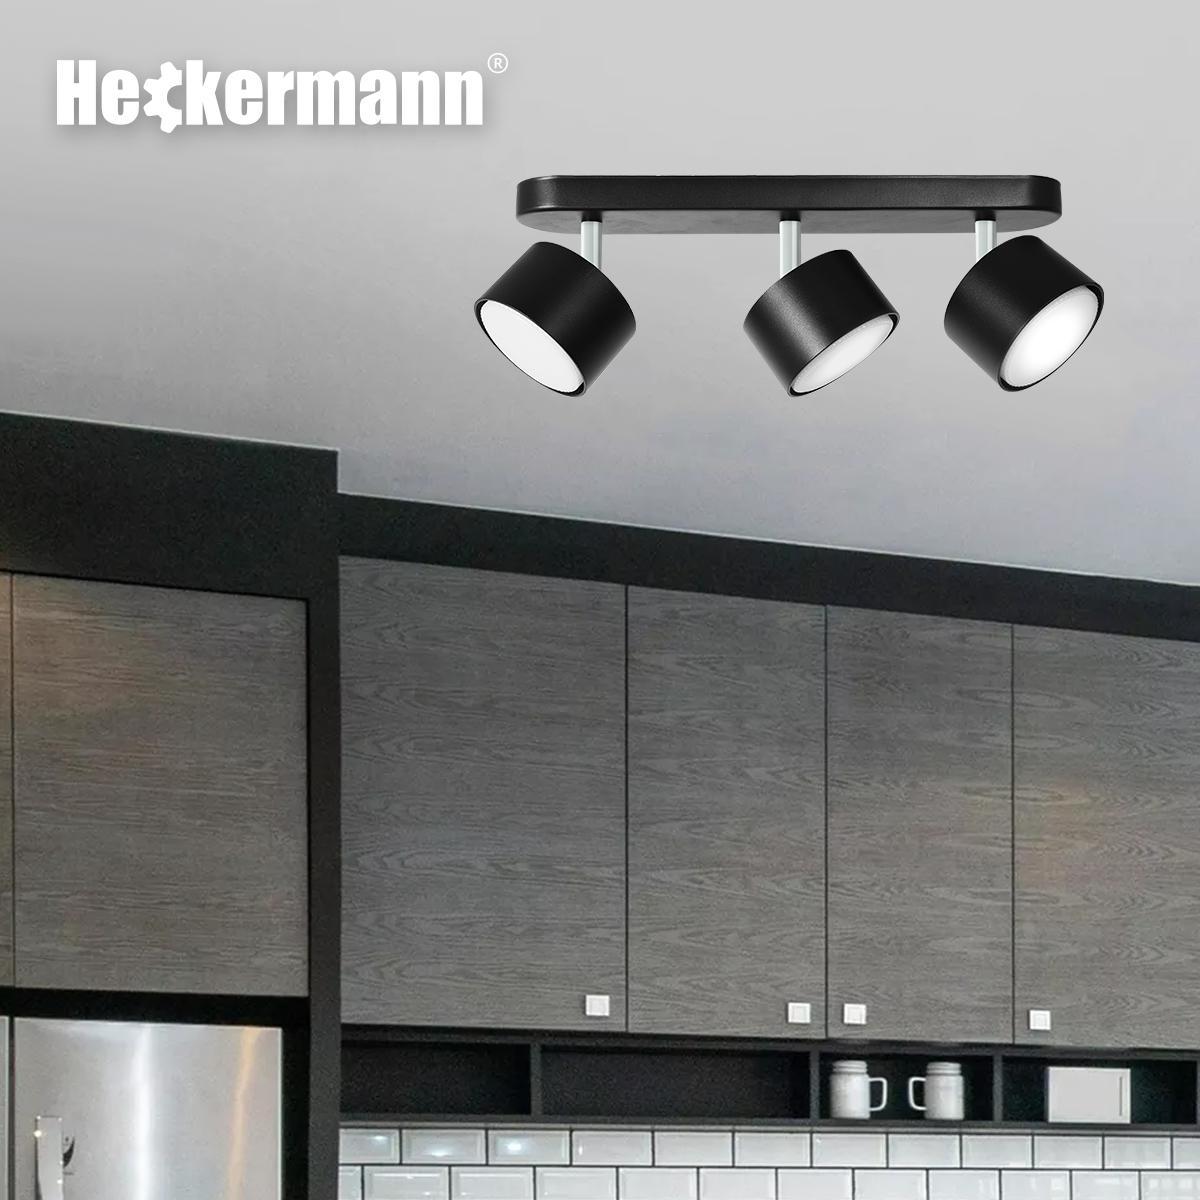 Lampa sufitowa punktowa LED Heckermann 8795316A Czarna 3x głowica 4 Full Screen